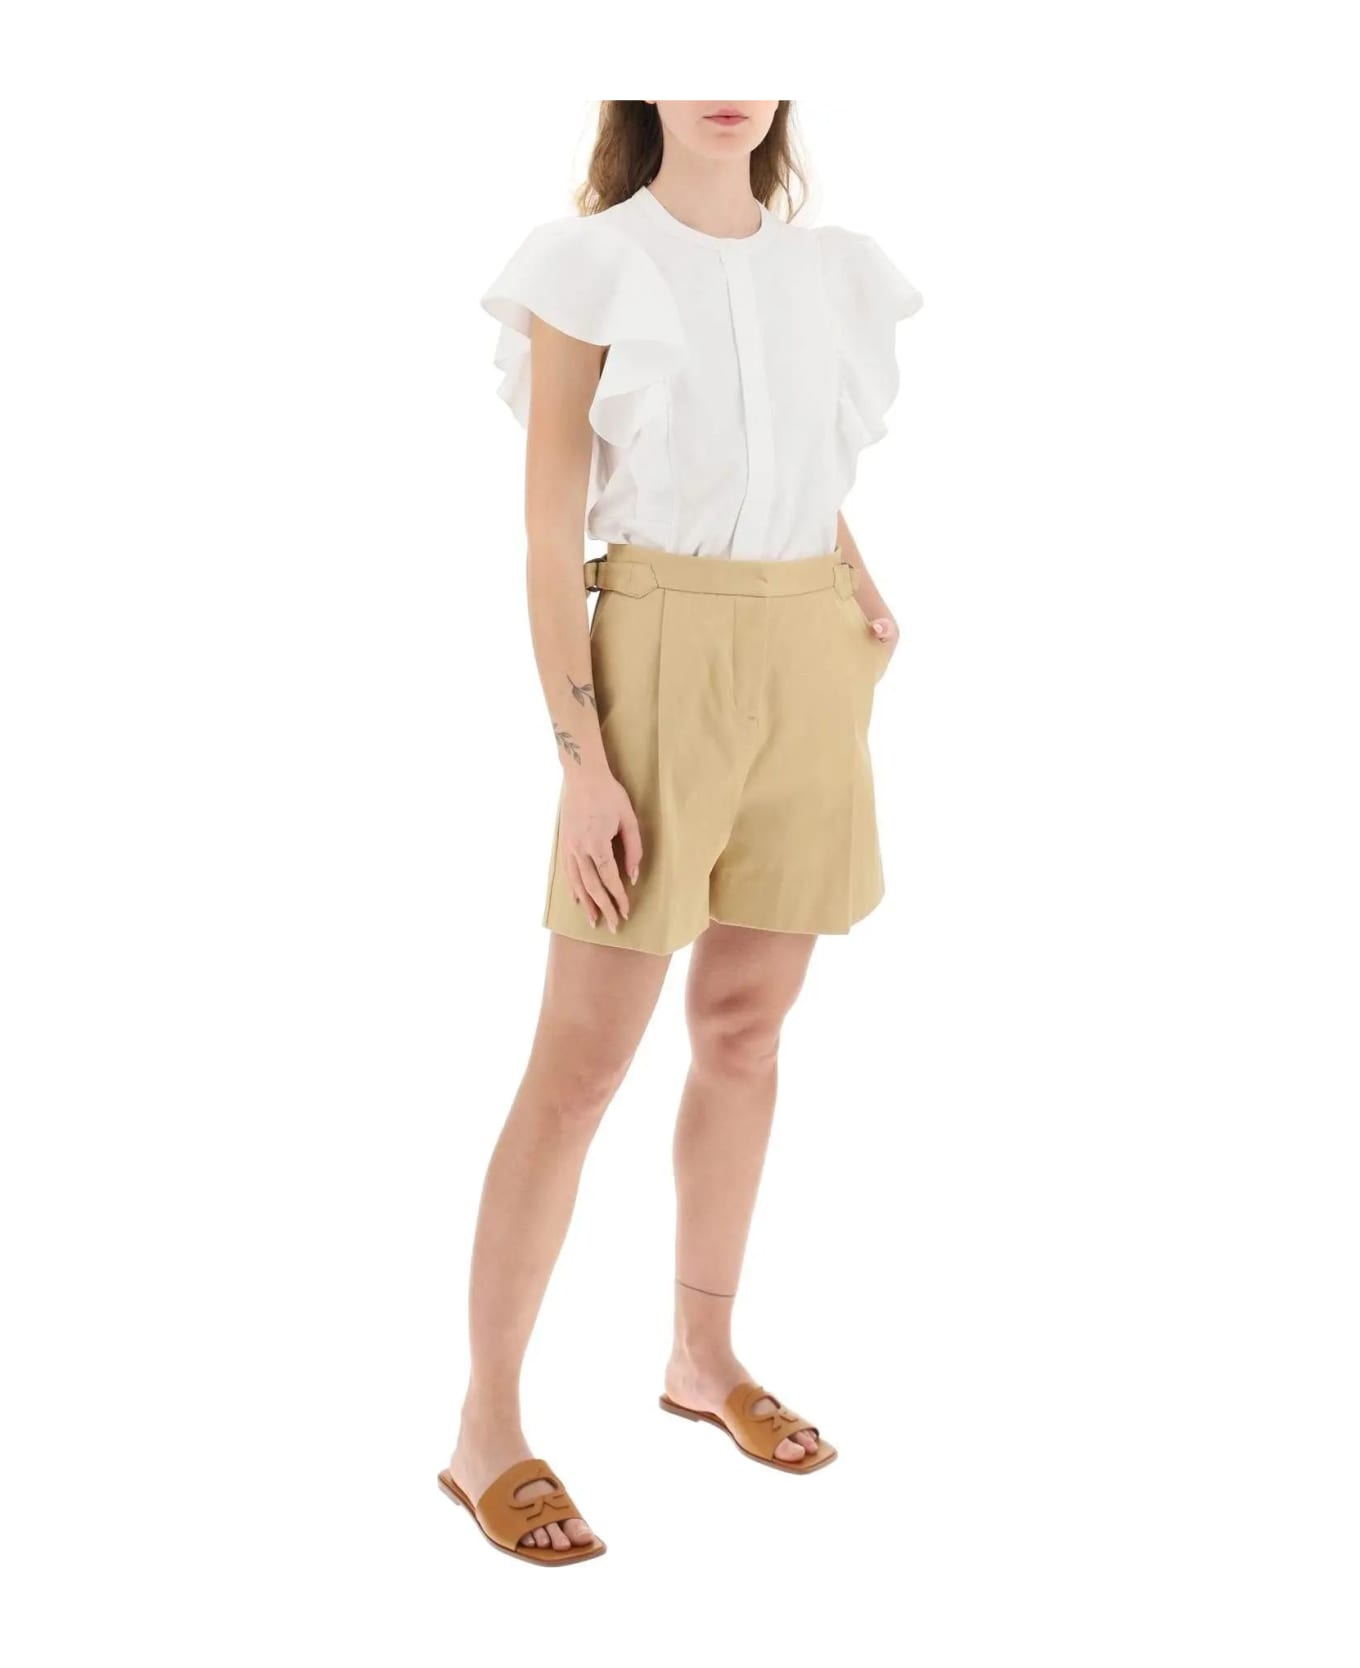 Chloé Cap Sleeves Shirt - white ブラウス